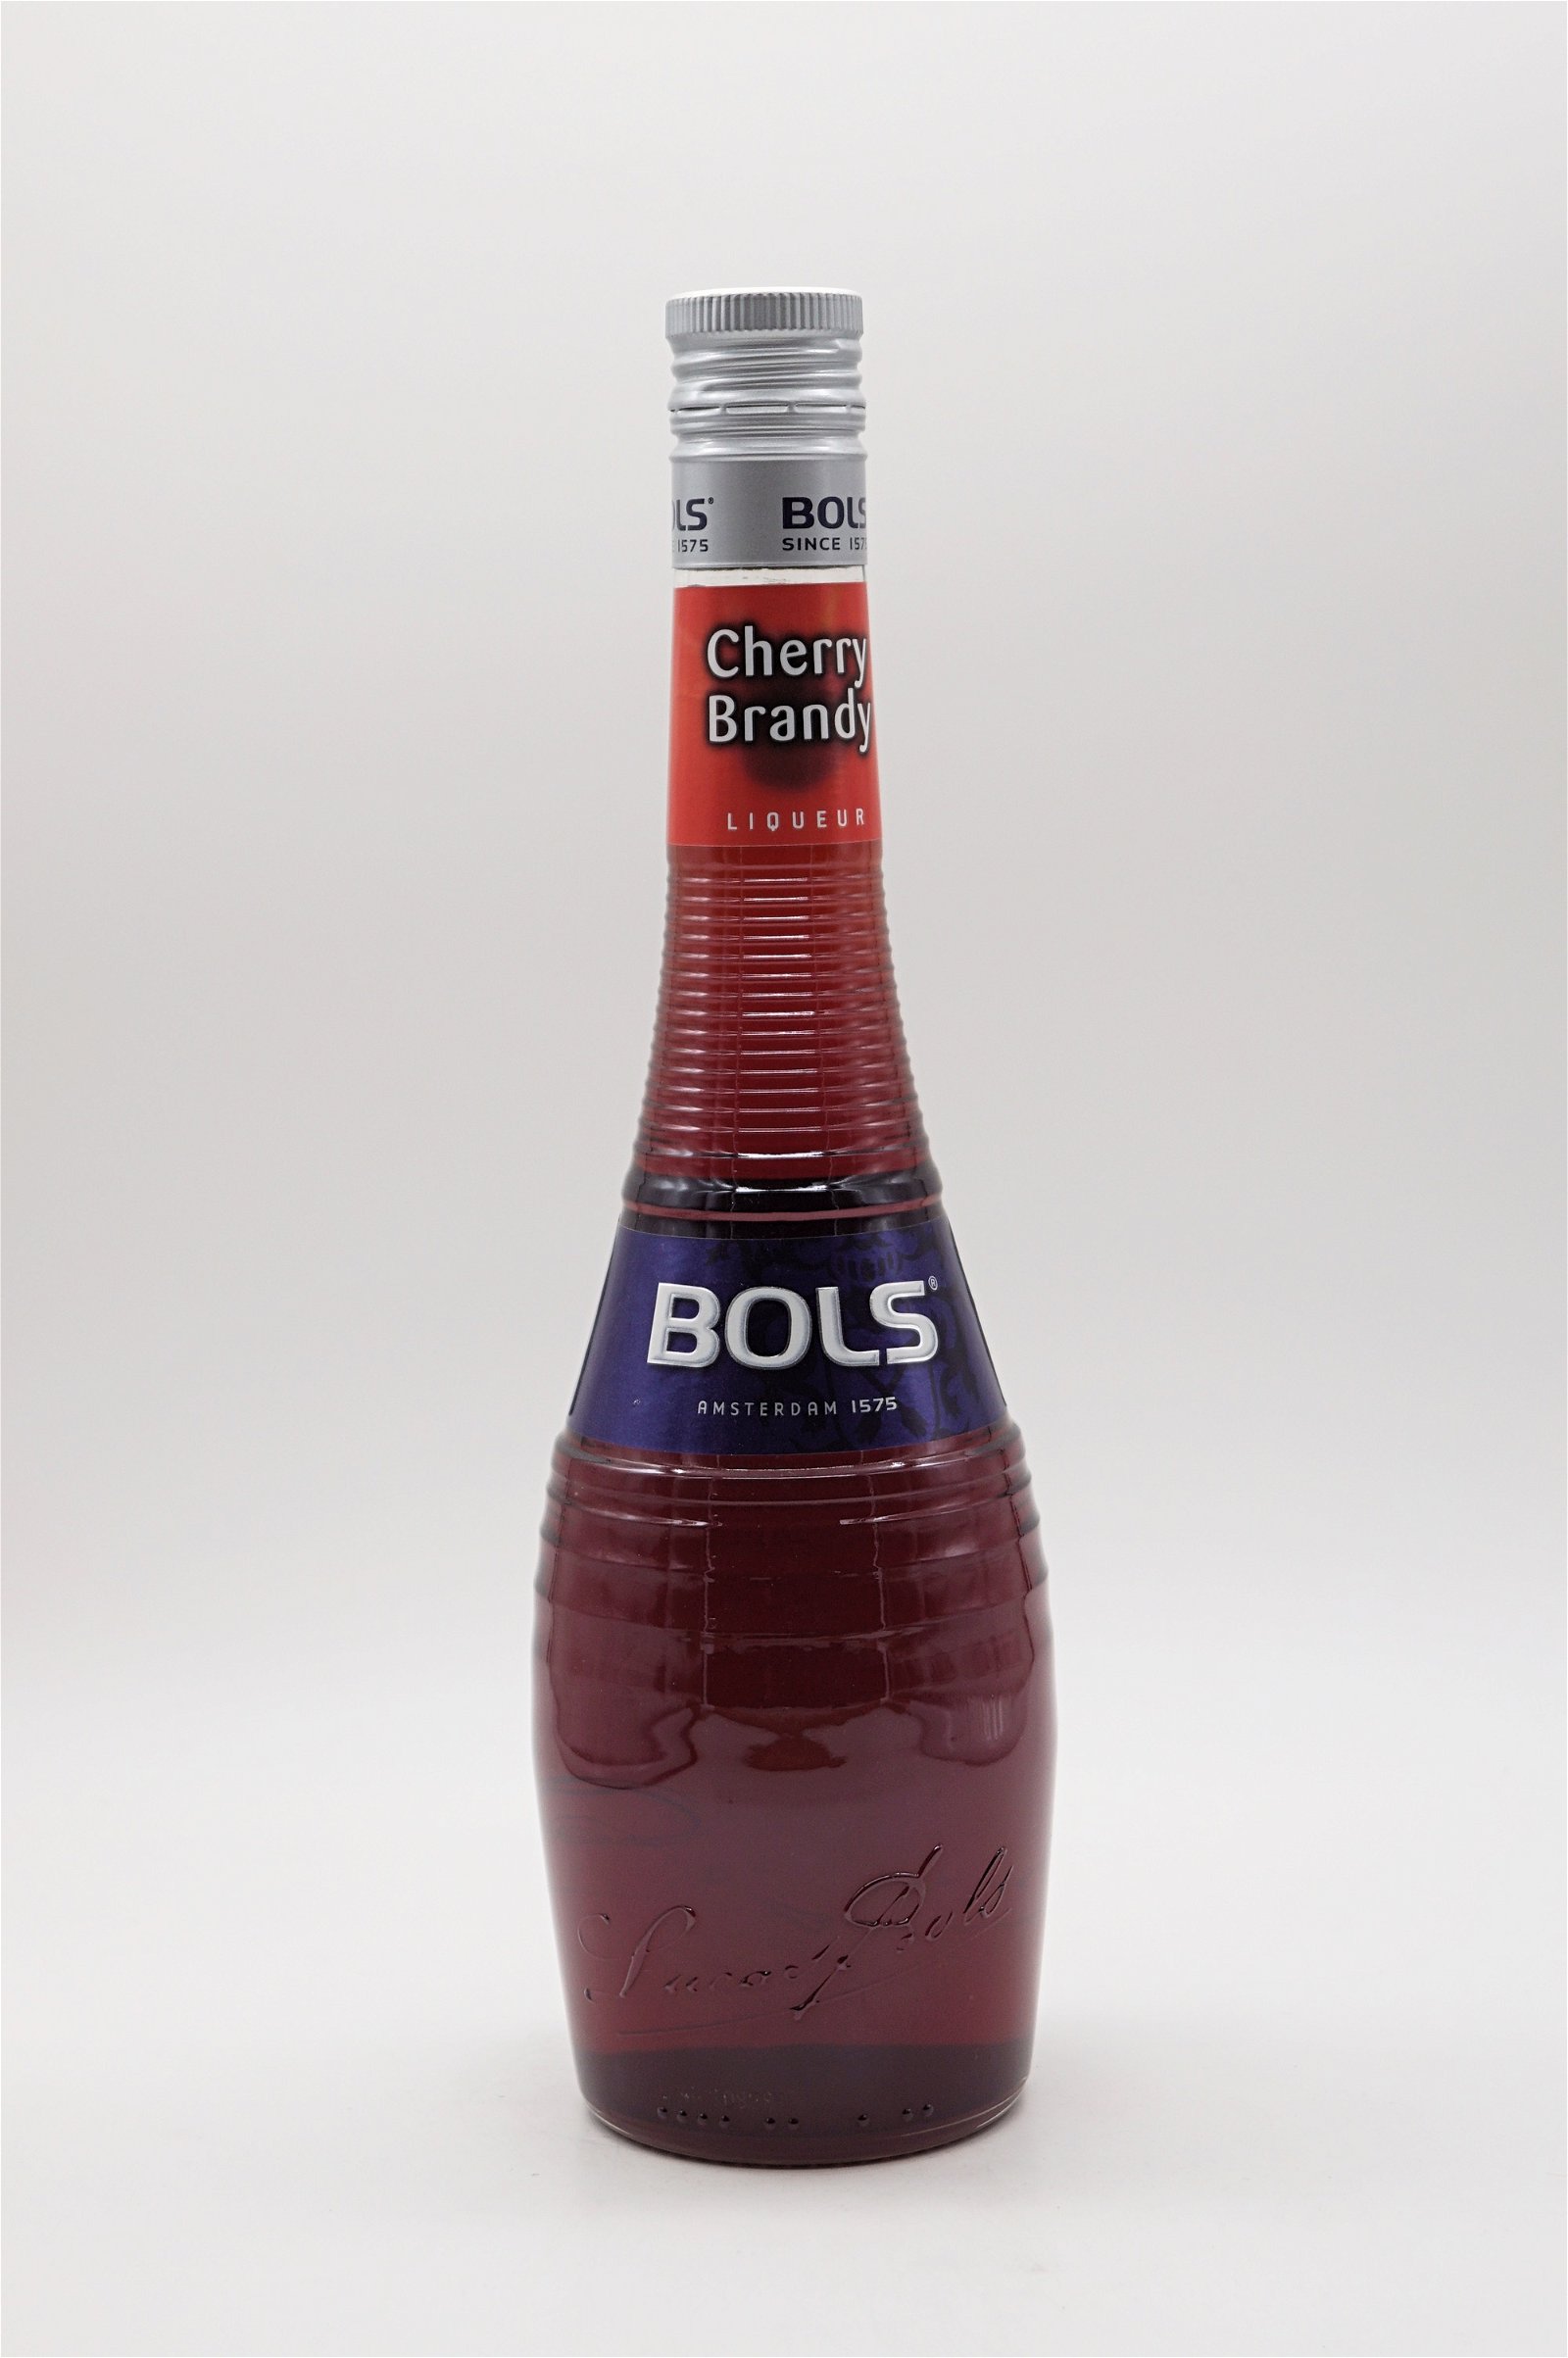 Bols Cherry Brandy Liqueur